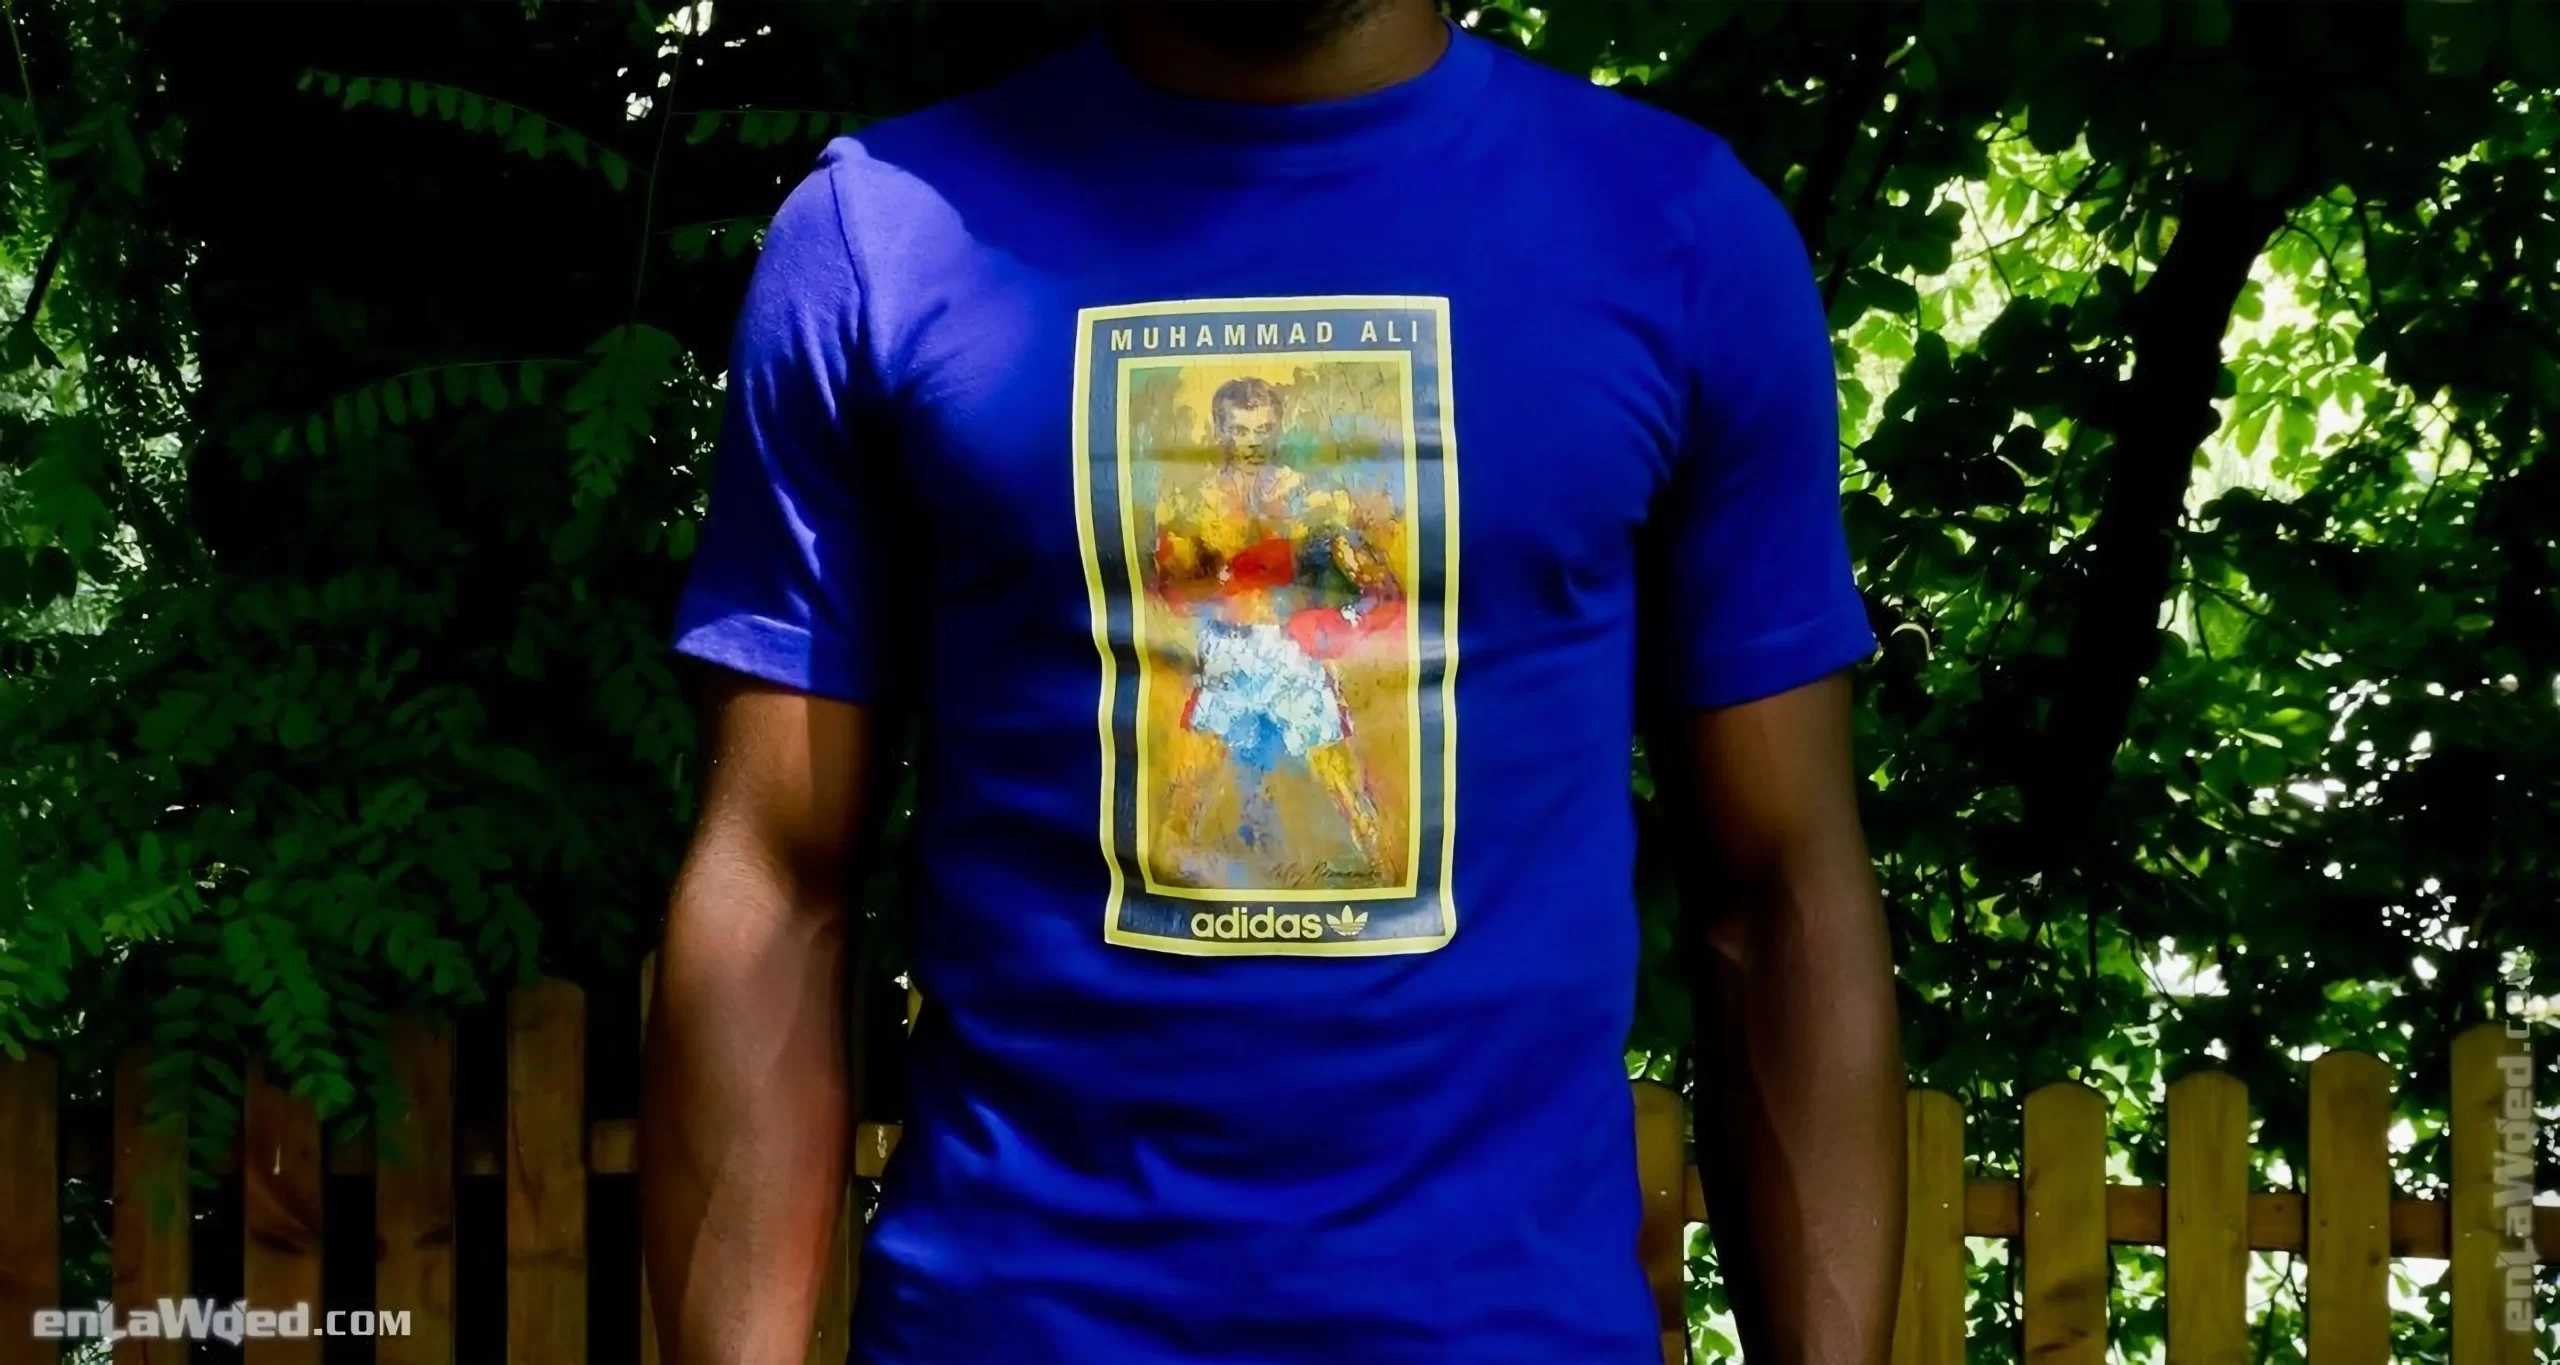 Men’s 2007 Muhammad Ali Respect T-Shirt by Adidas: Tawdry (EnLawded.com file #lmc5rpscitc0ihurdwq)